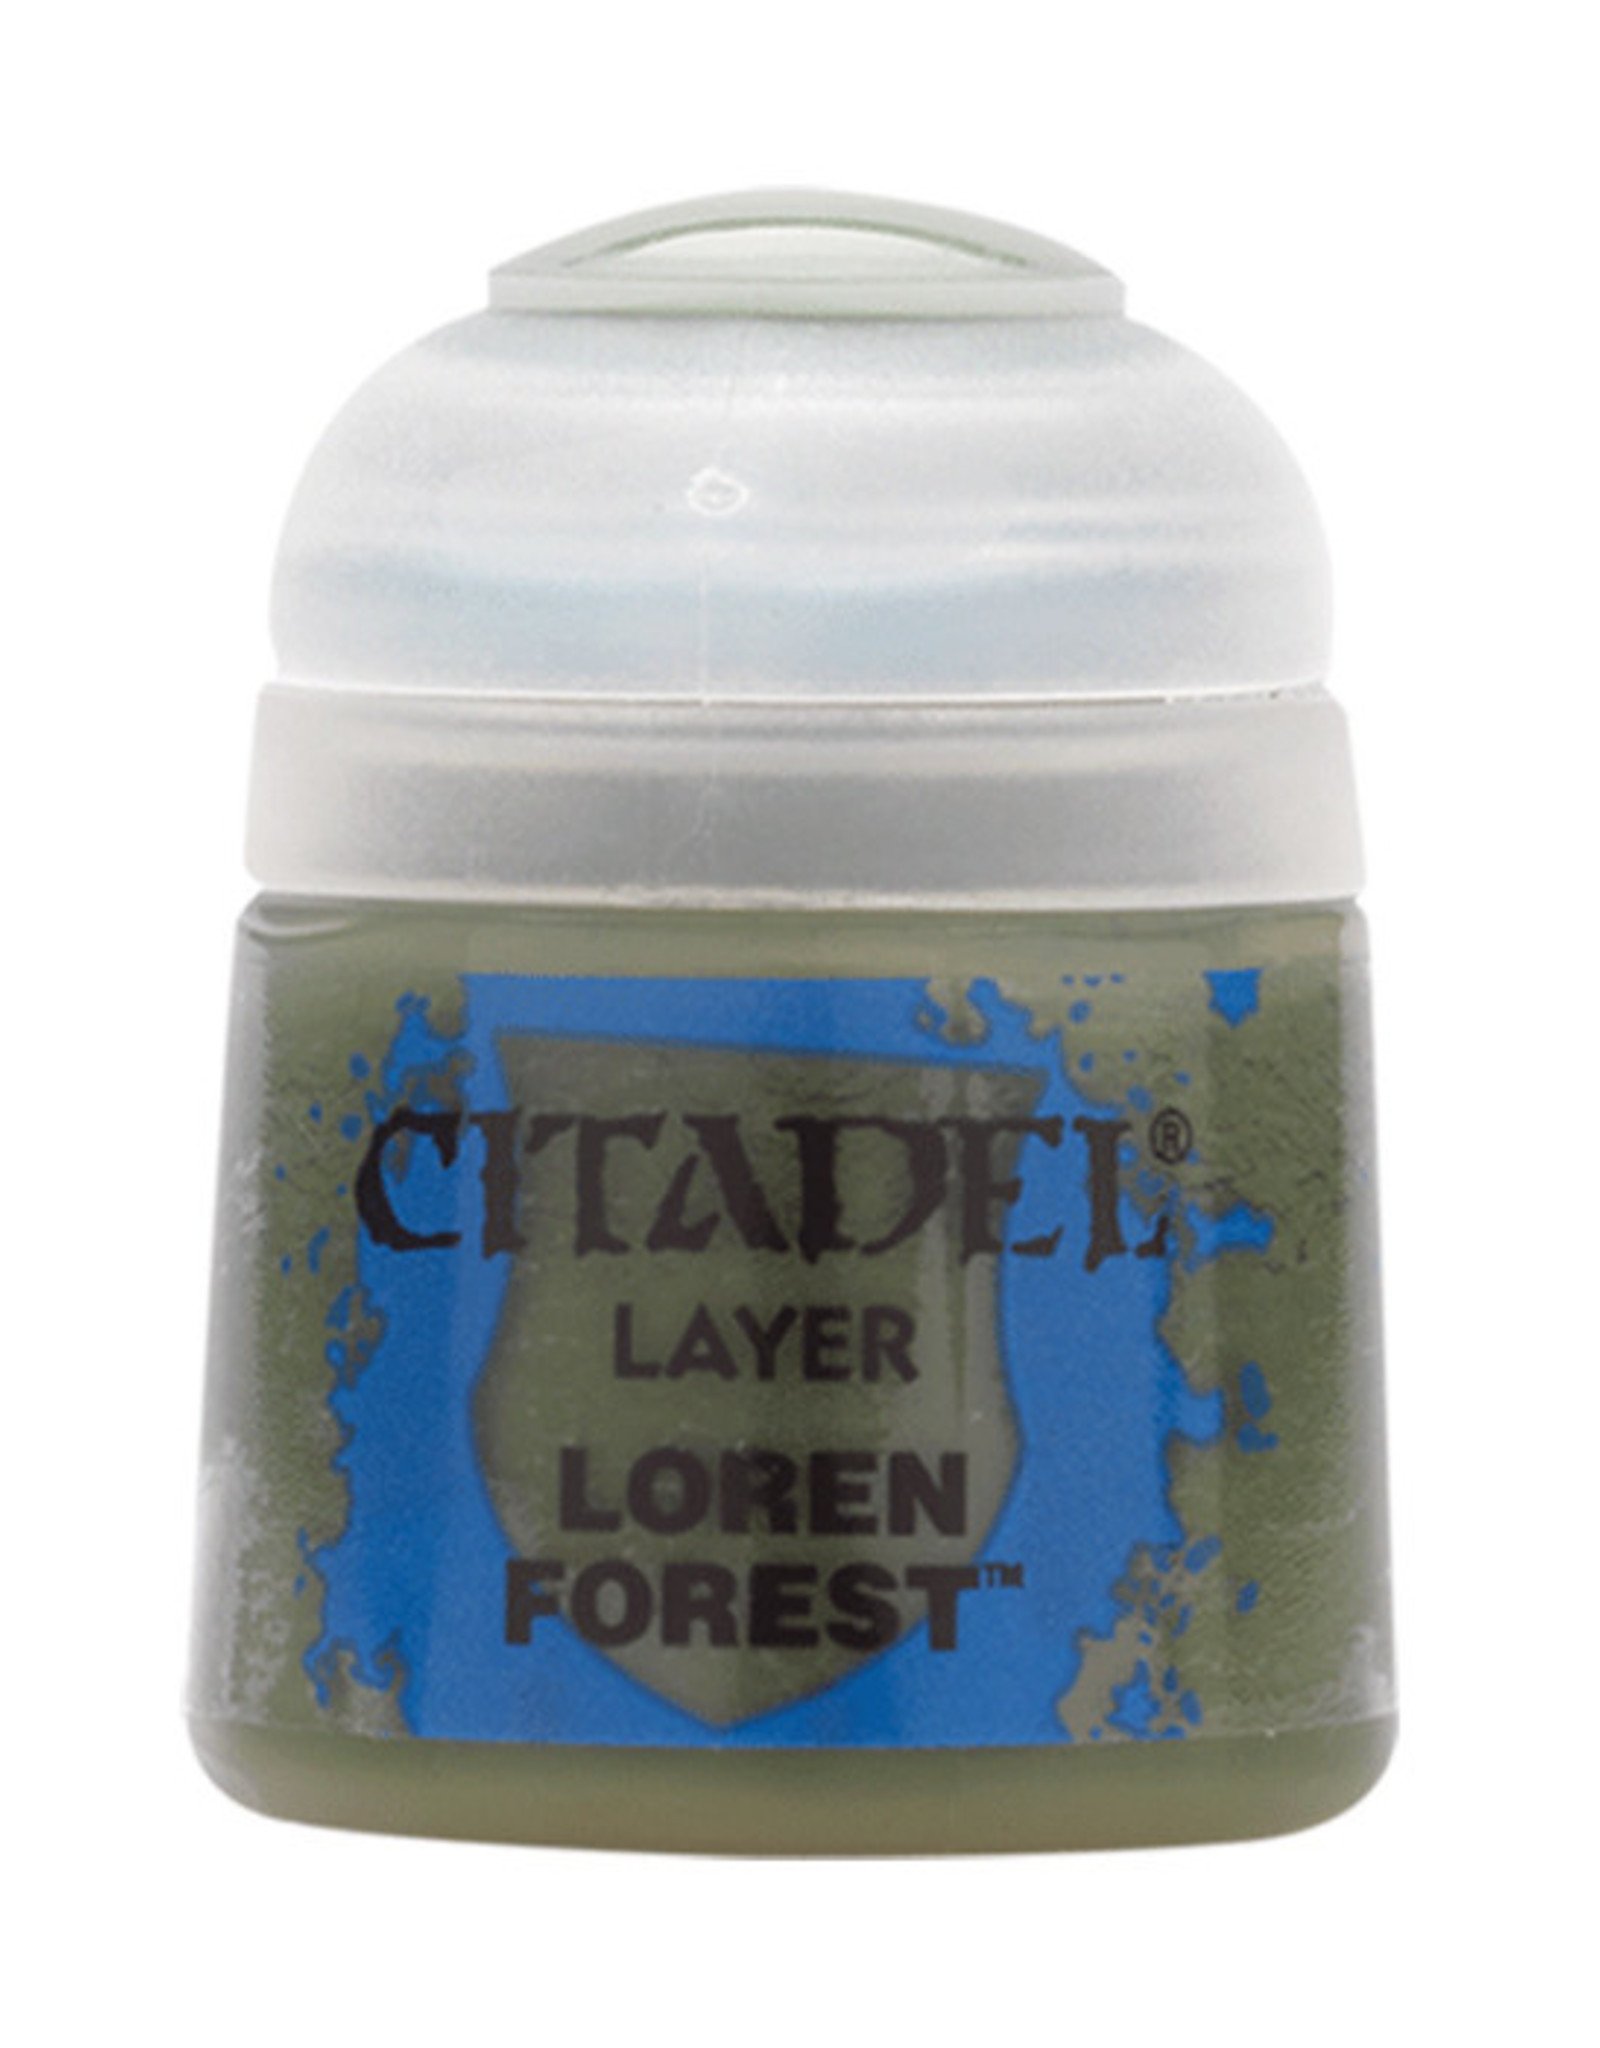 Citadel Citadel Colour: Layer - Loren Forest